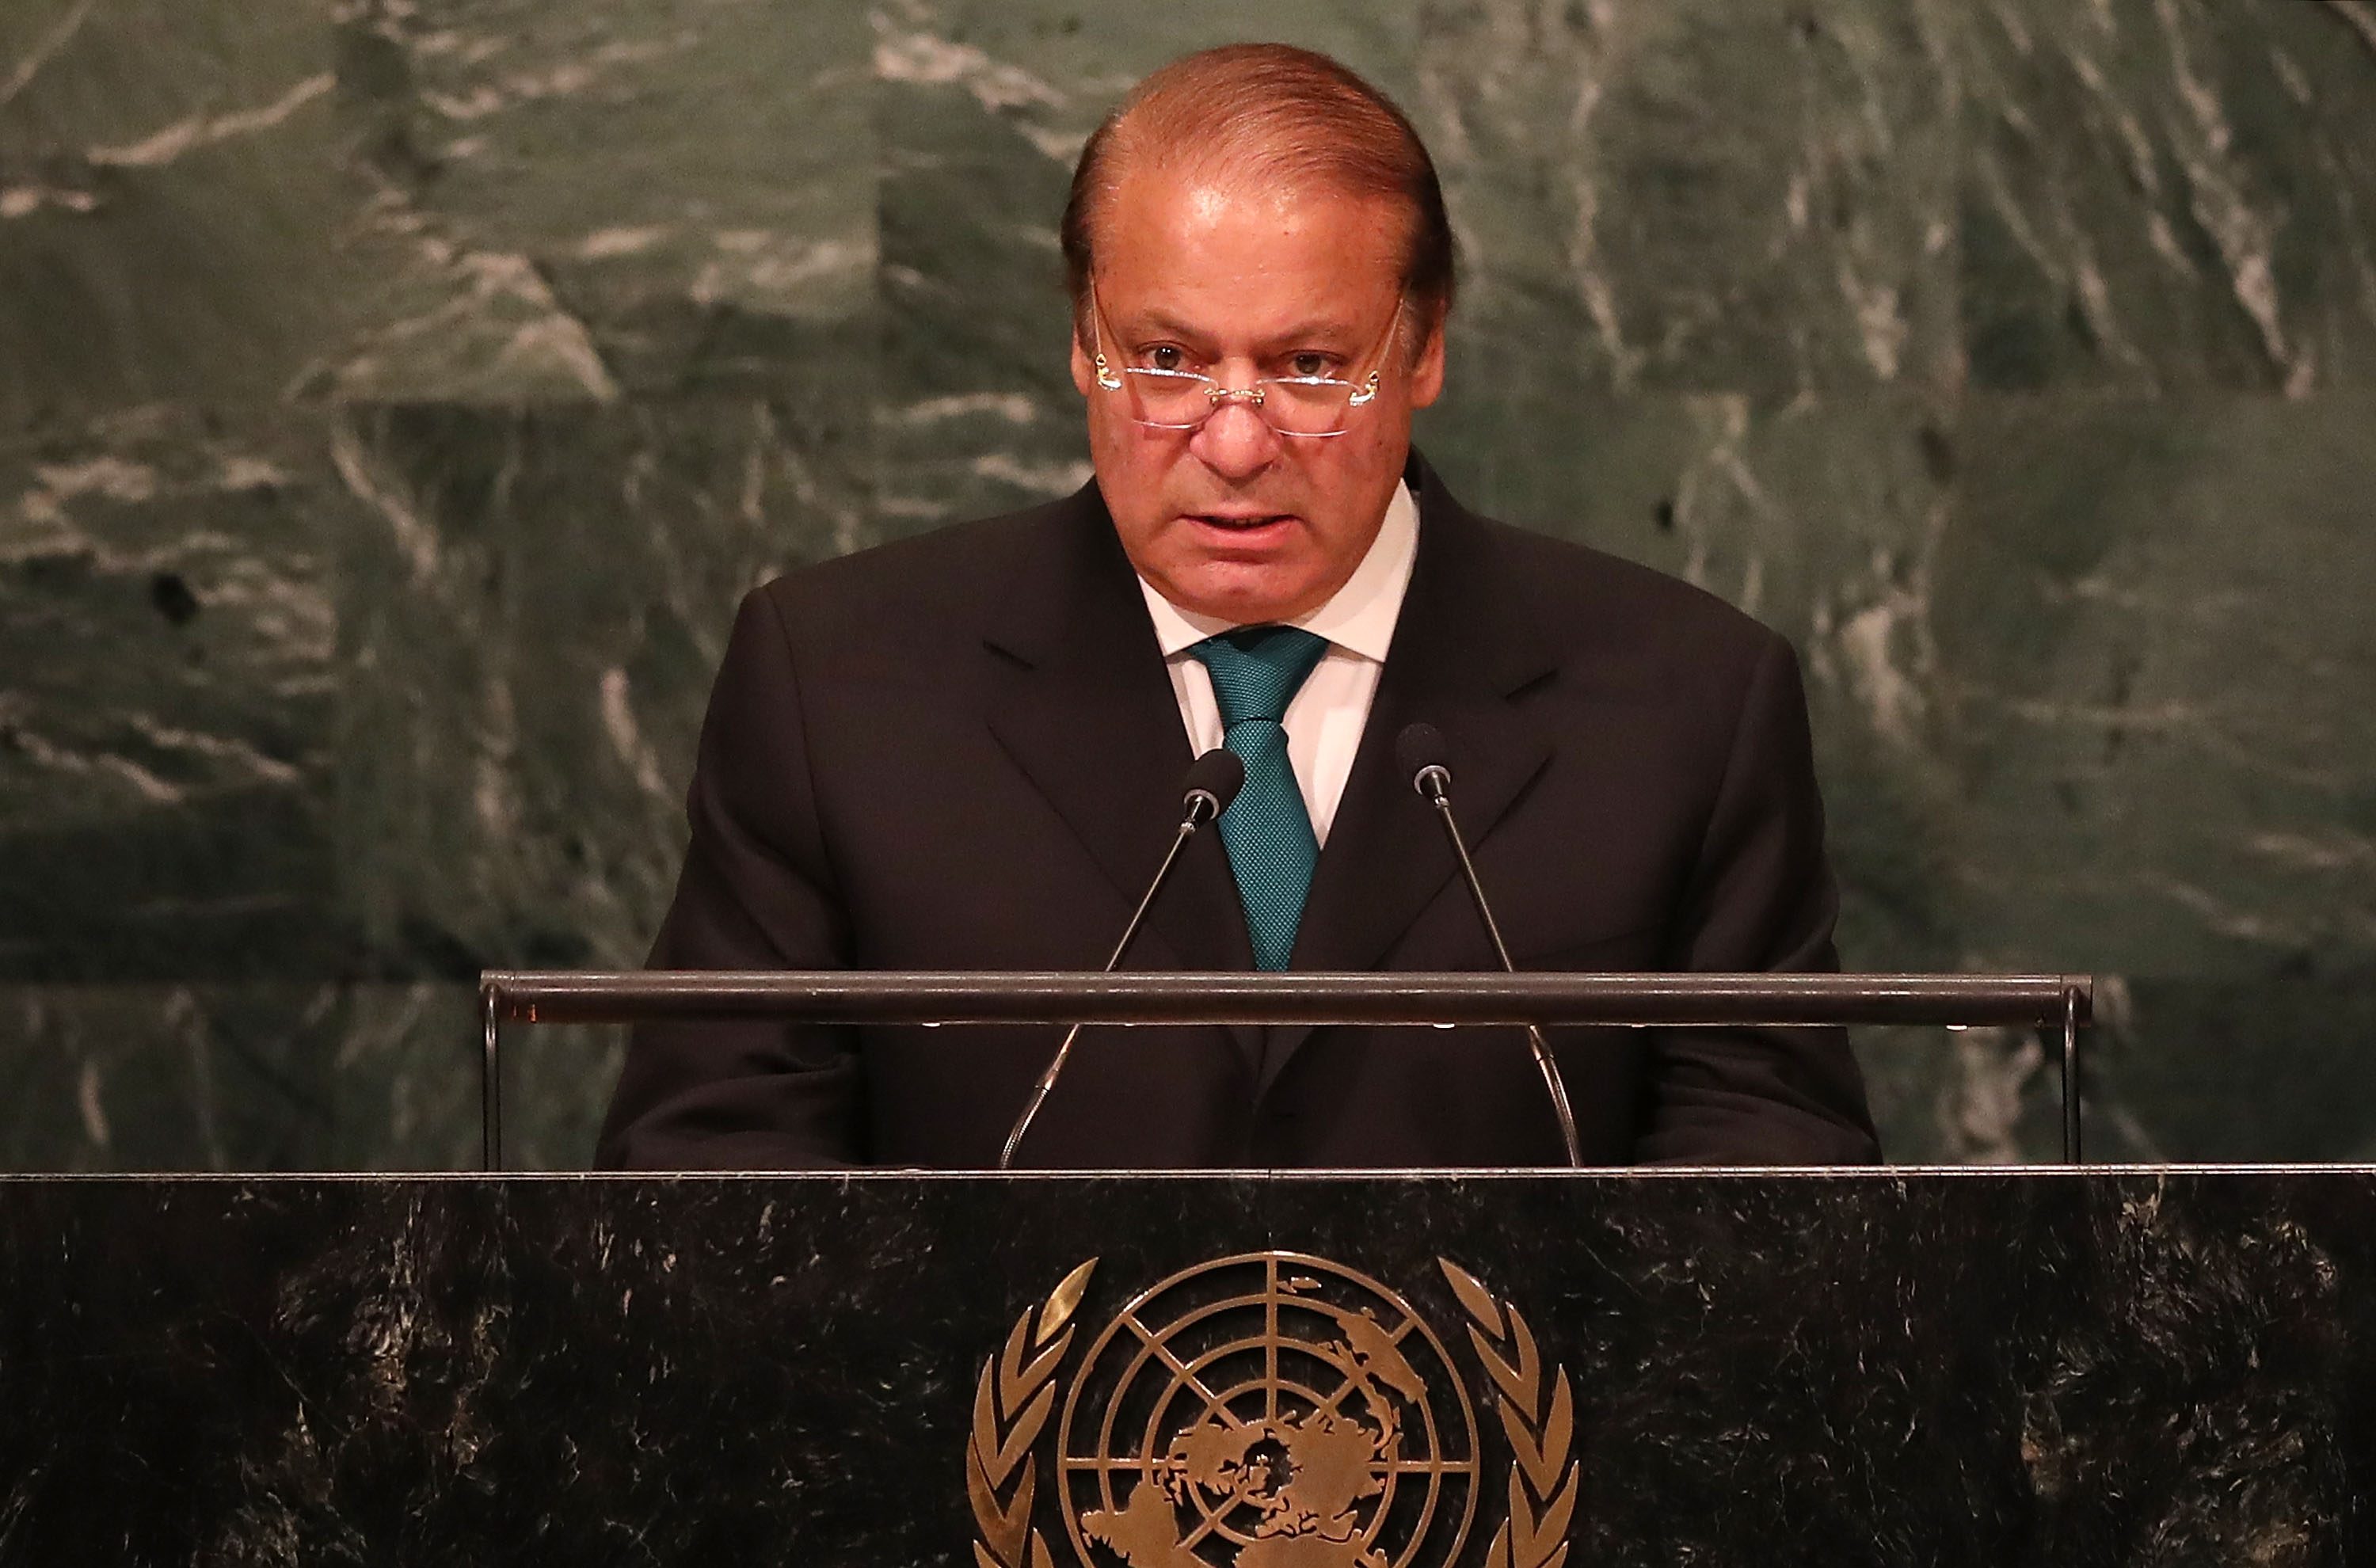 Pakistan's Prime Minister Nawaz Sharif addresses the General Assembly at the United Nations on September 21, 2016 in New York City. (Spencer Platt—Getty Images)